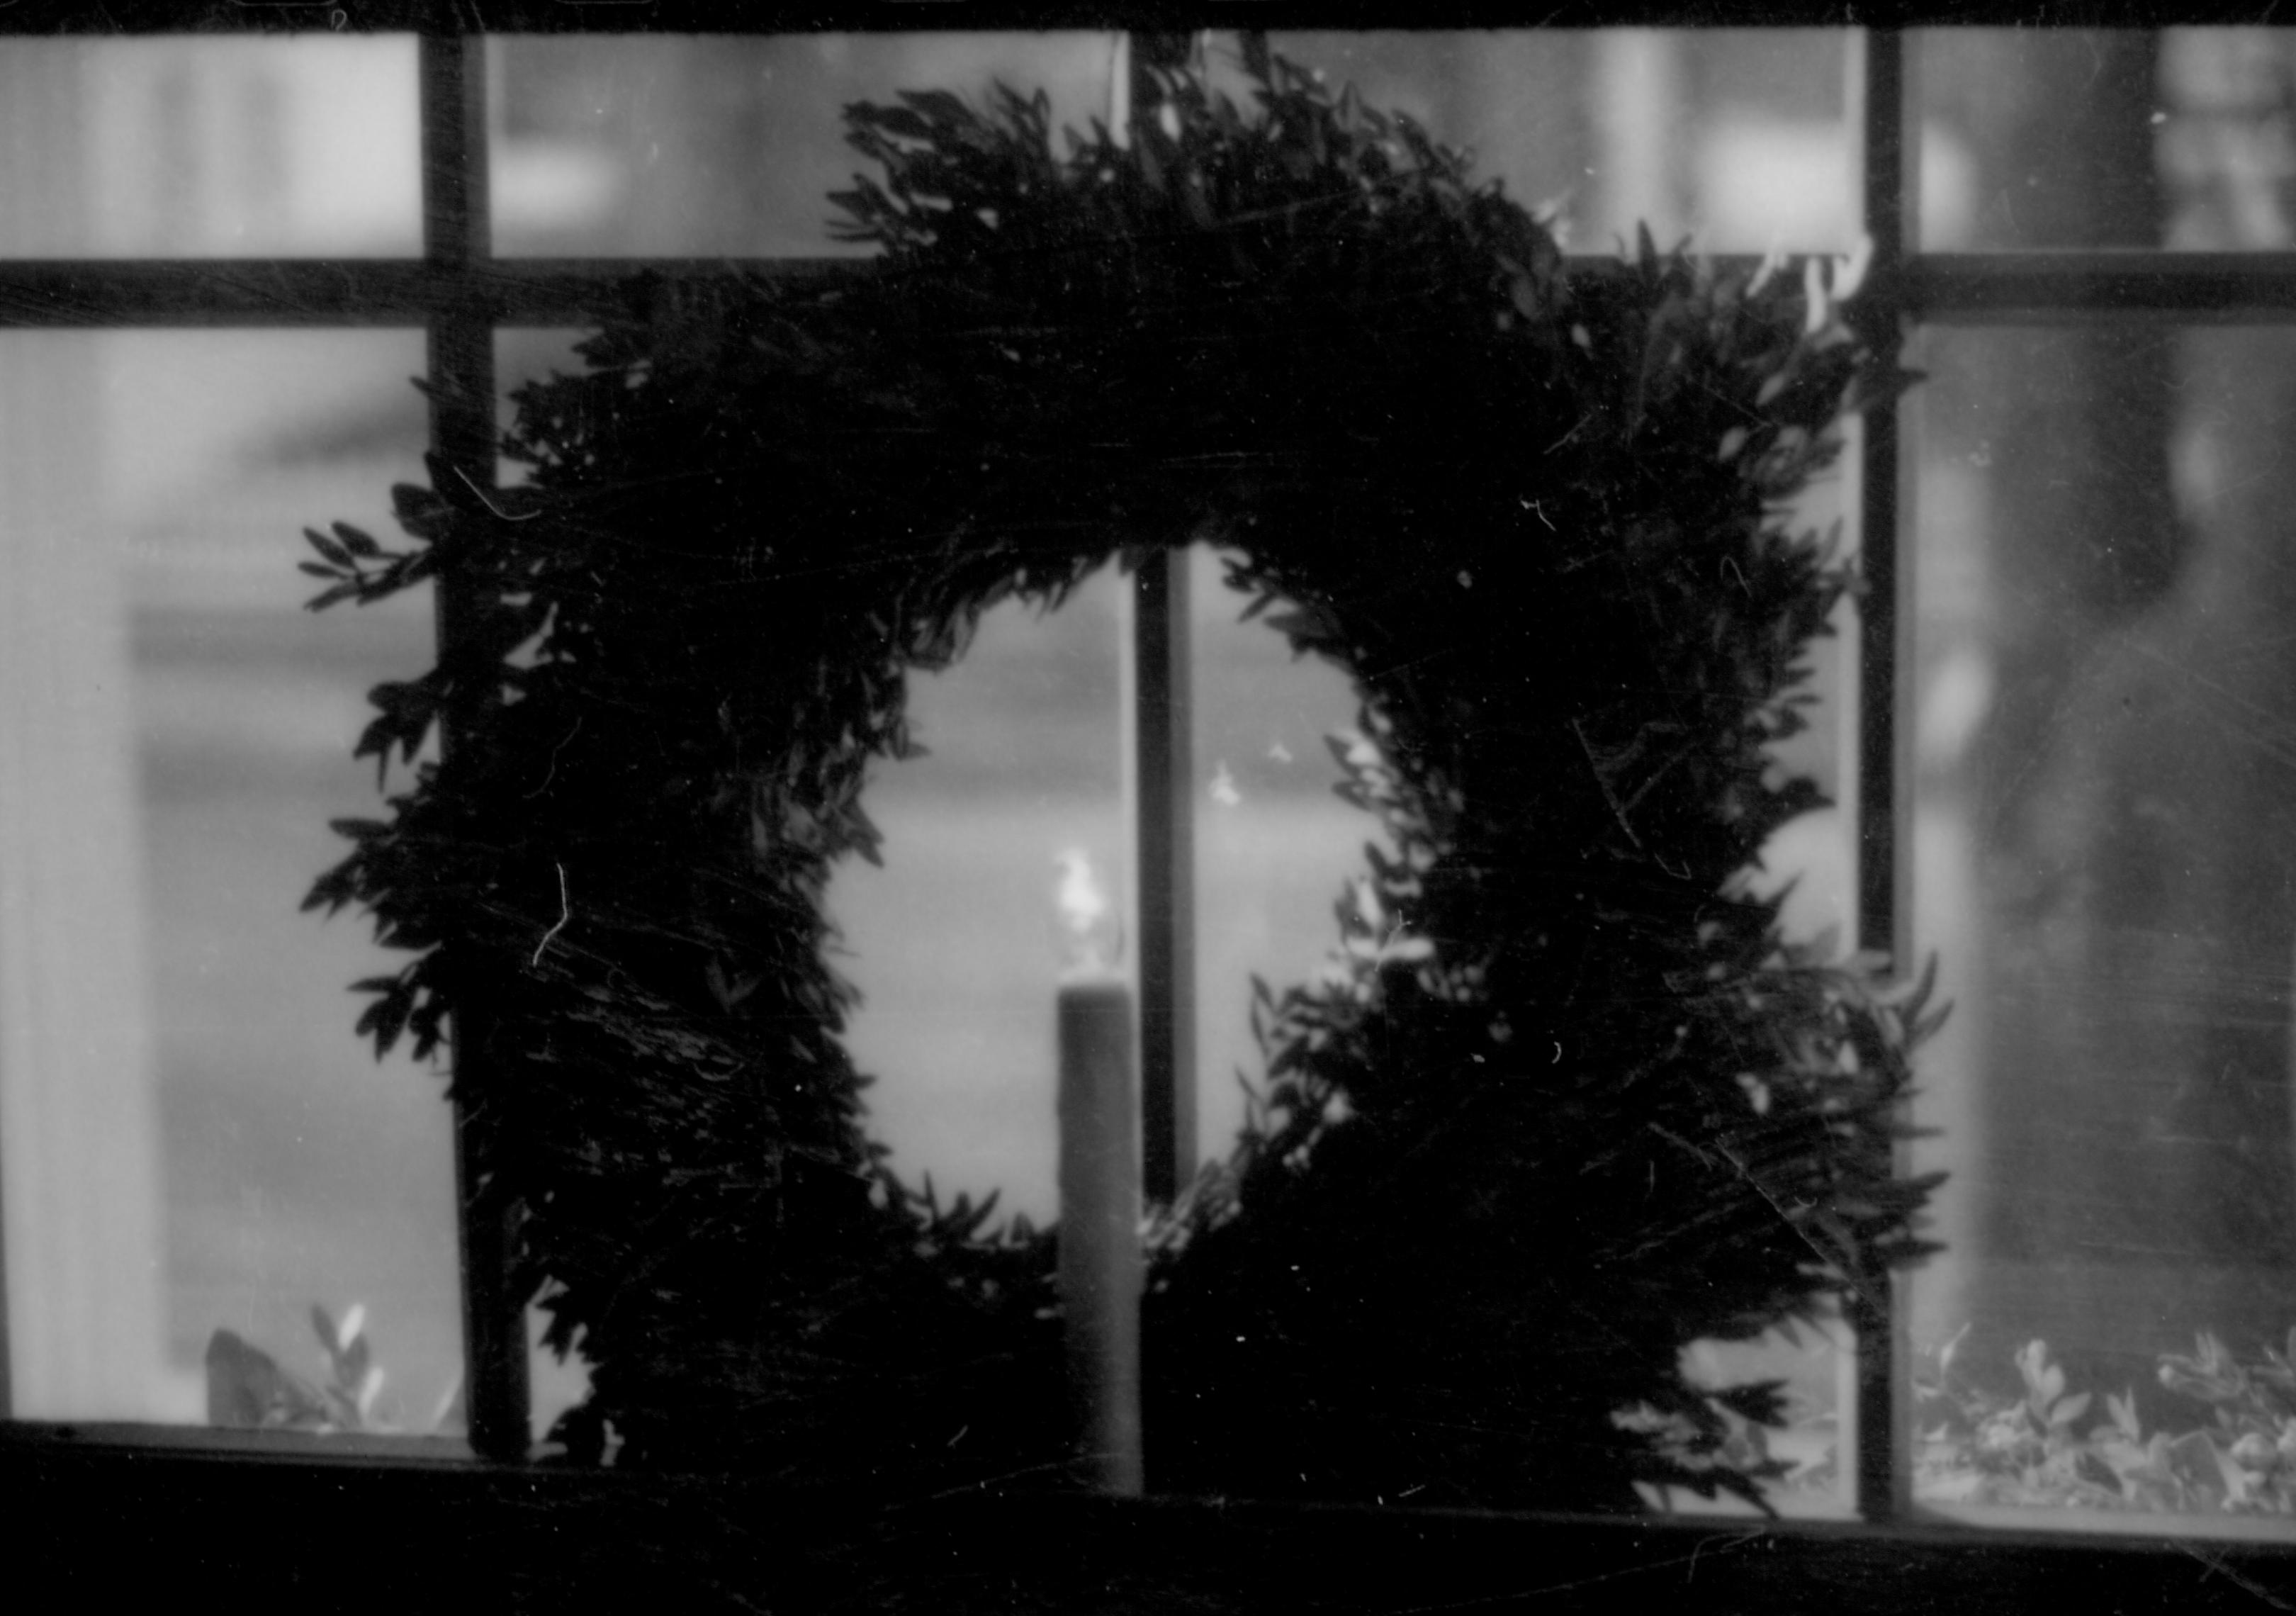 Lincoln Home NHS- Christmas in Lincoln Neighborhood Christmas decor on interior window sill. Christmas, neighborhood, wreath, candle, electric